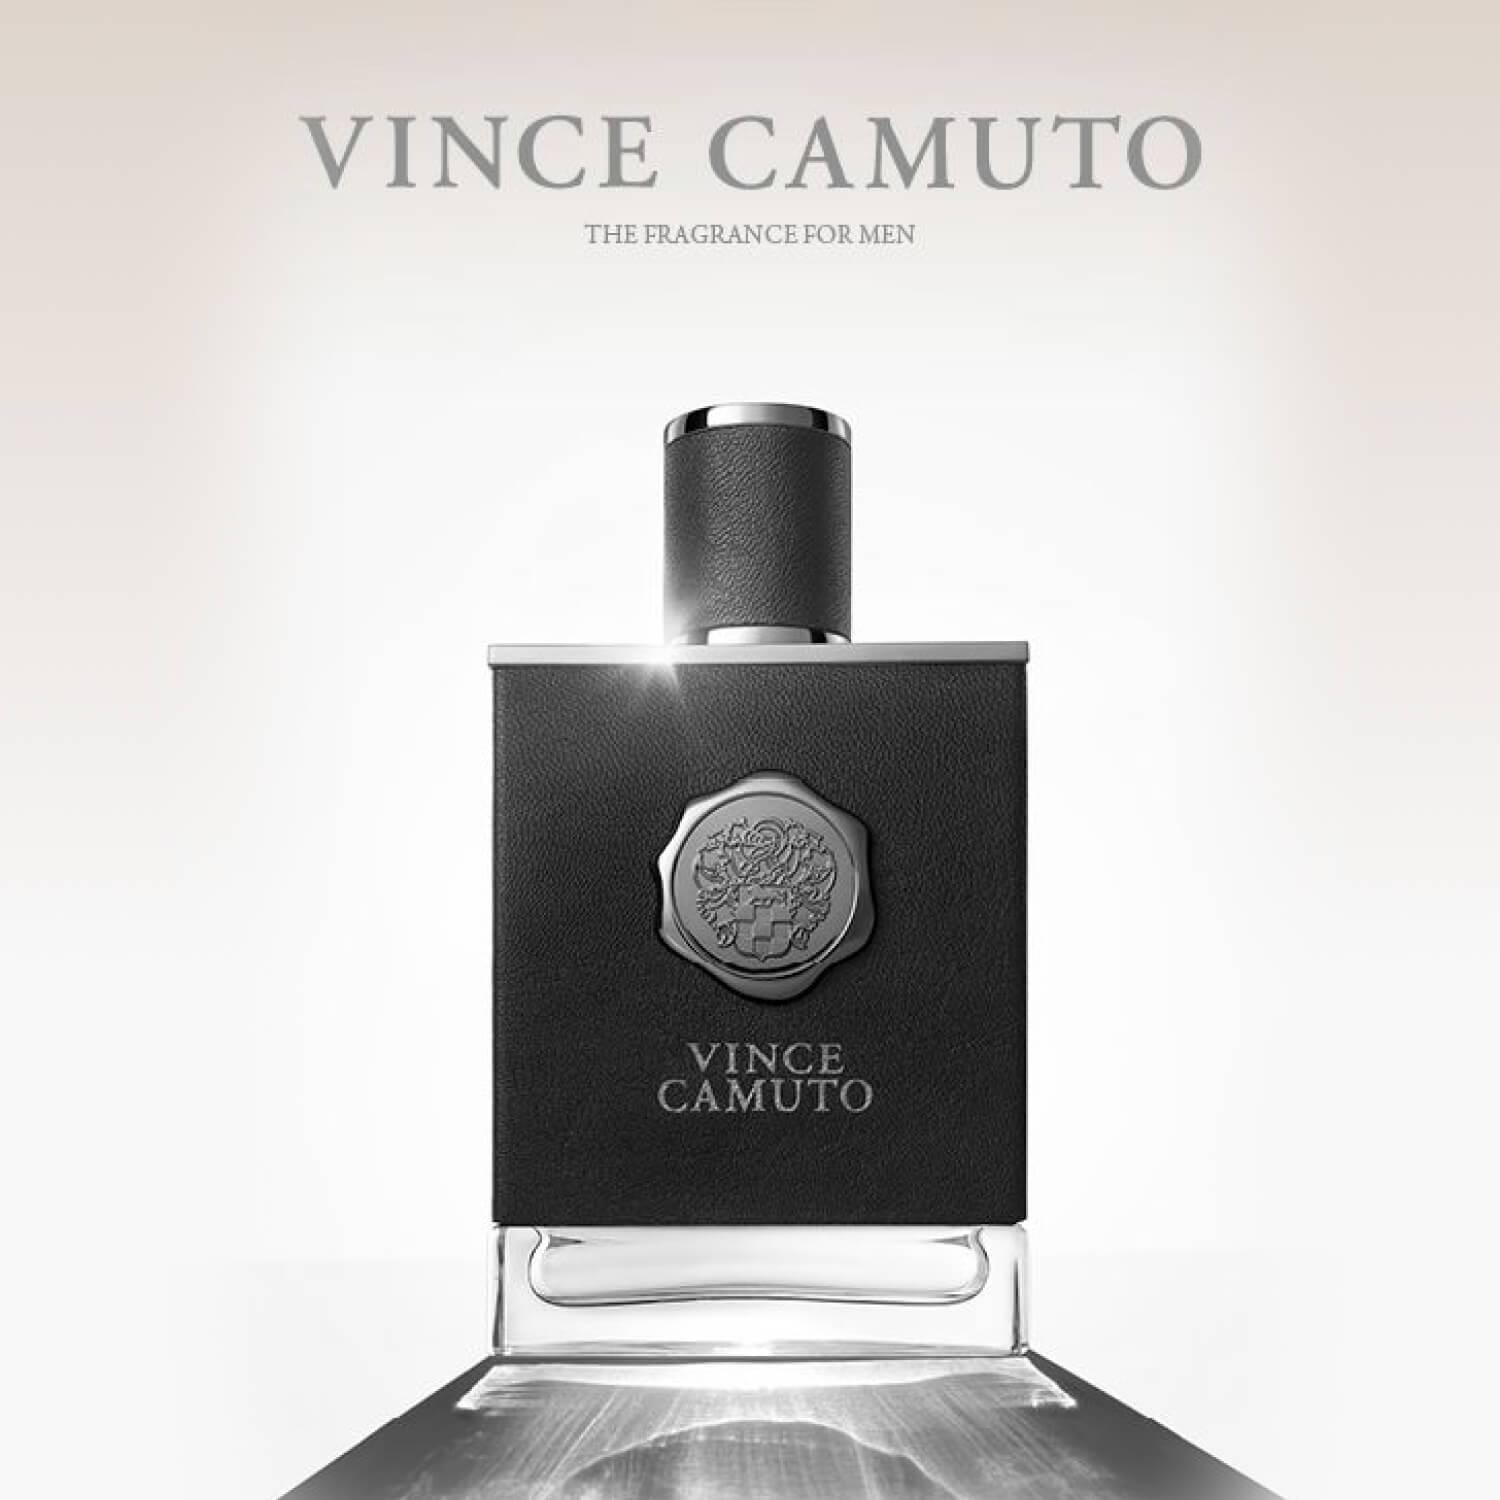 Get VINCE CAMUTO Vince Camuto Original for Men at Scentbird